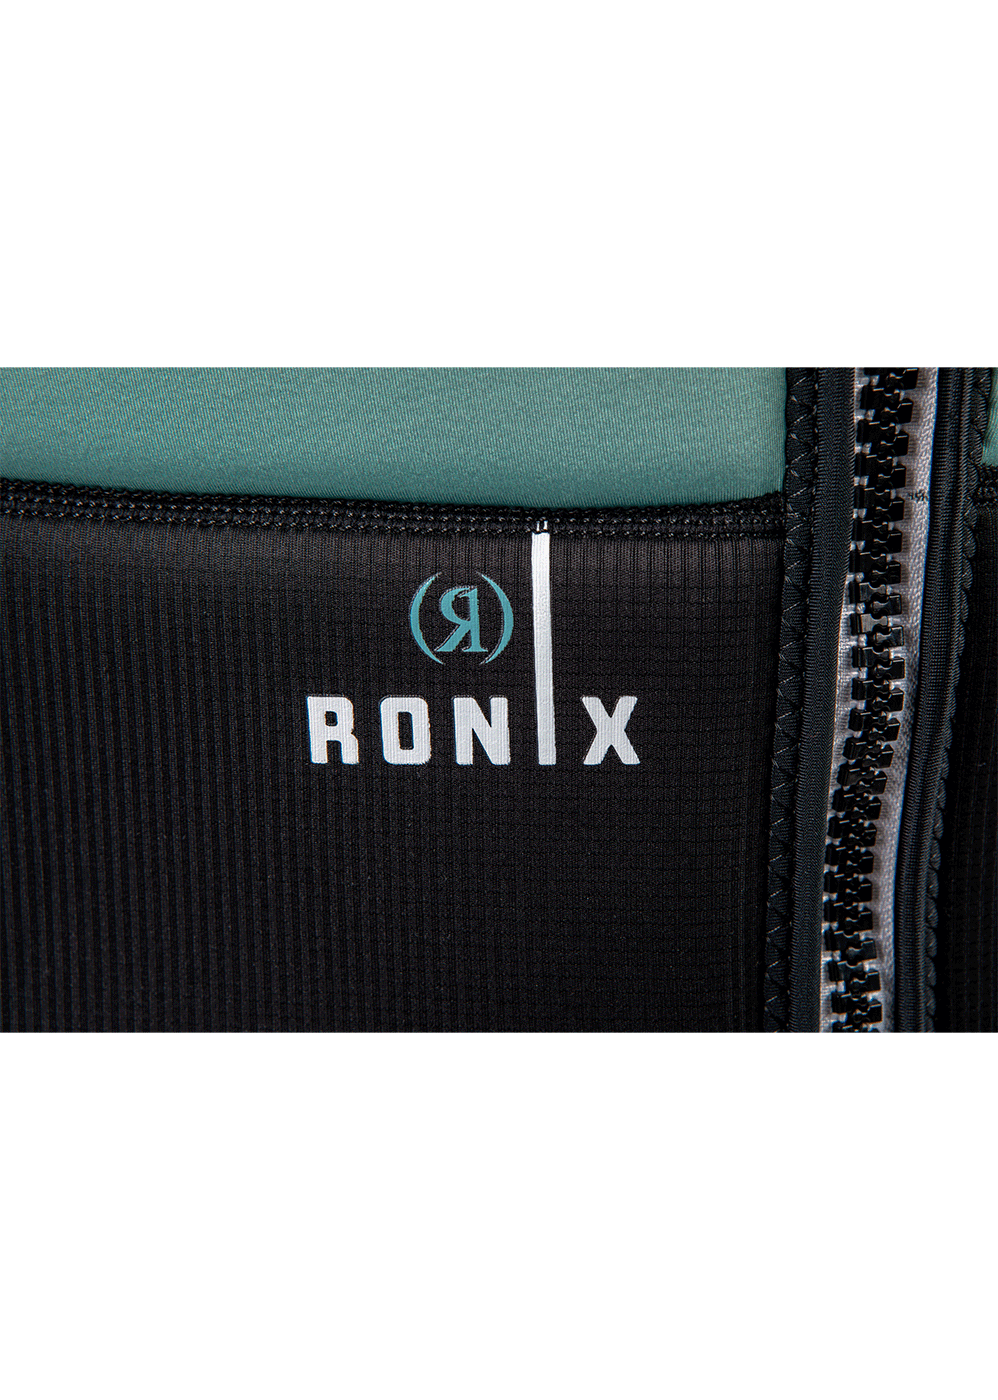 Ronix Avalon Women's Impact Life Vest - 88 Gear